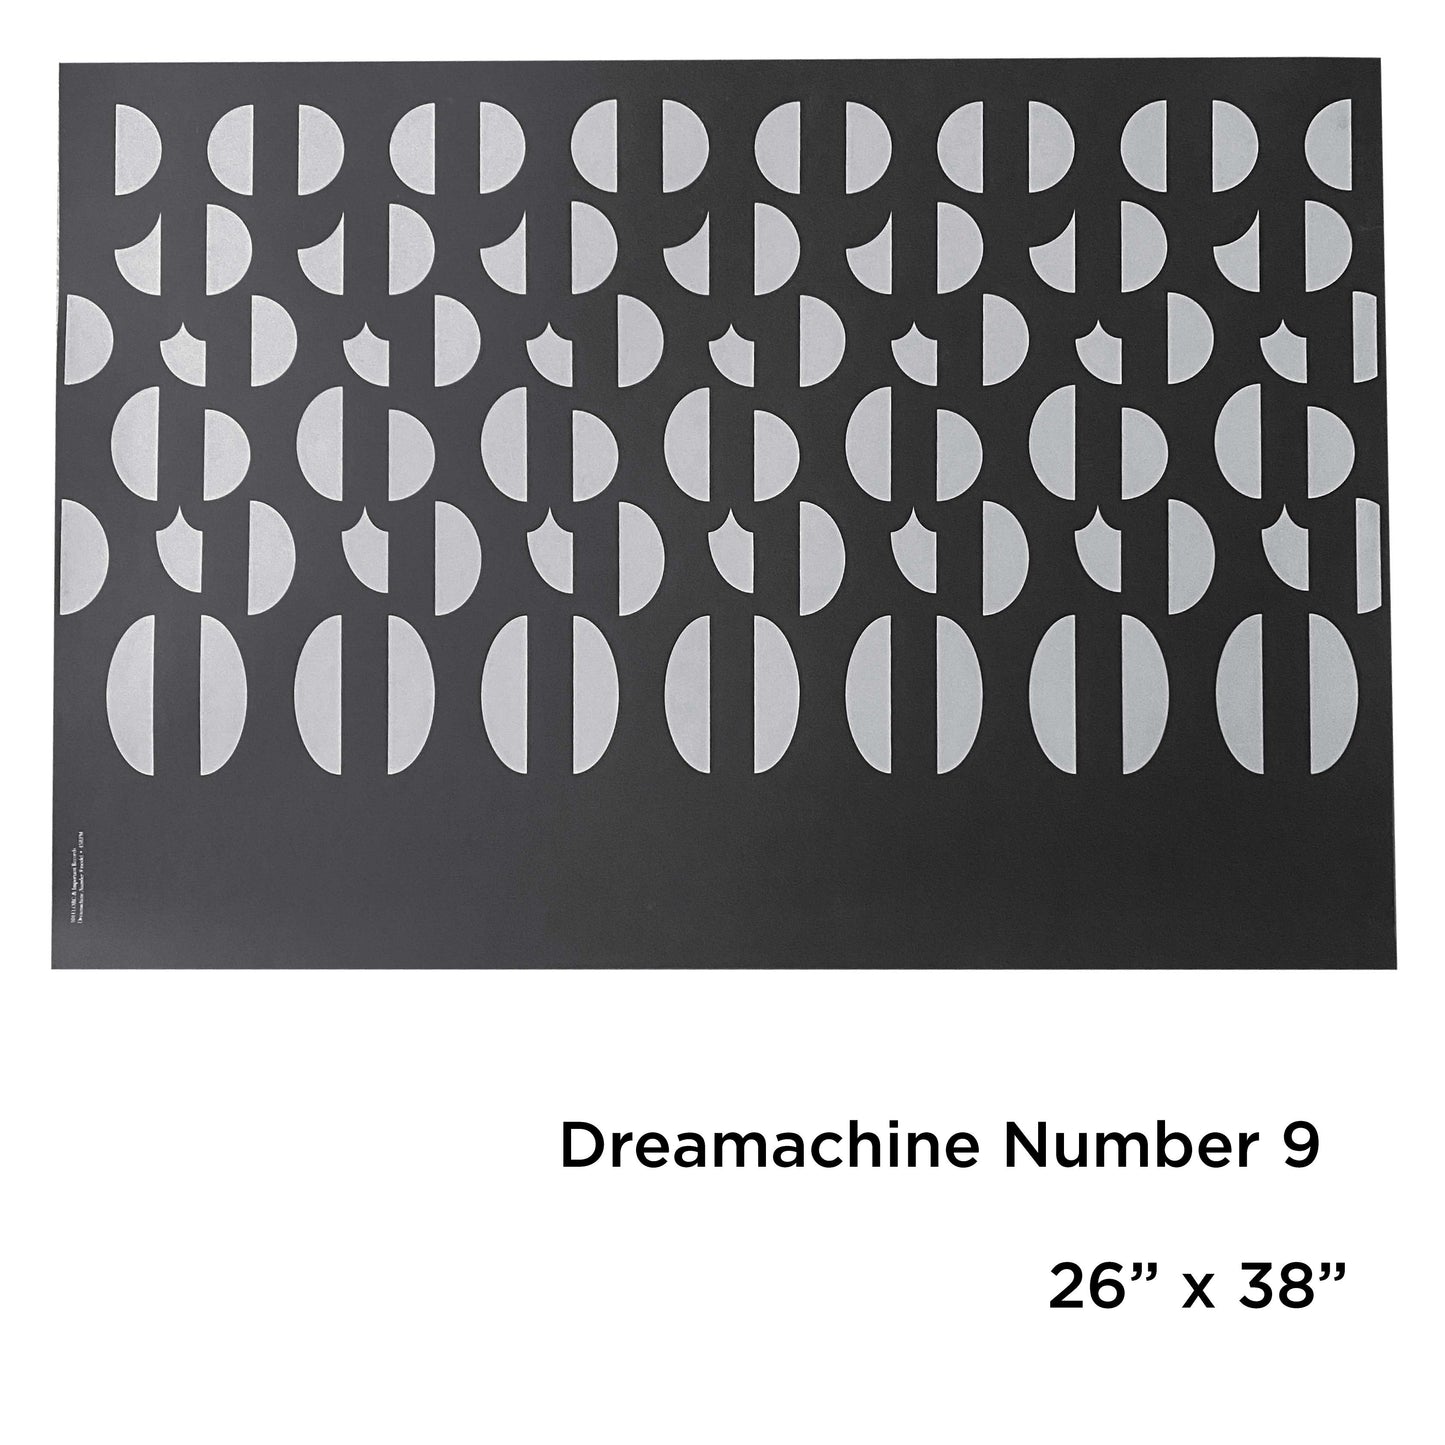 Brion Gysin's Dreamachine (Dream Machine - Dreammachine)